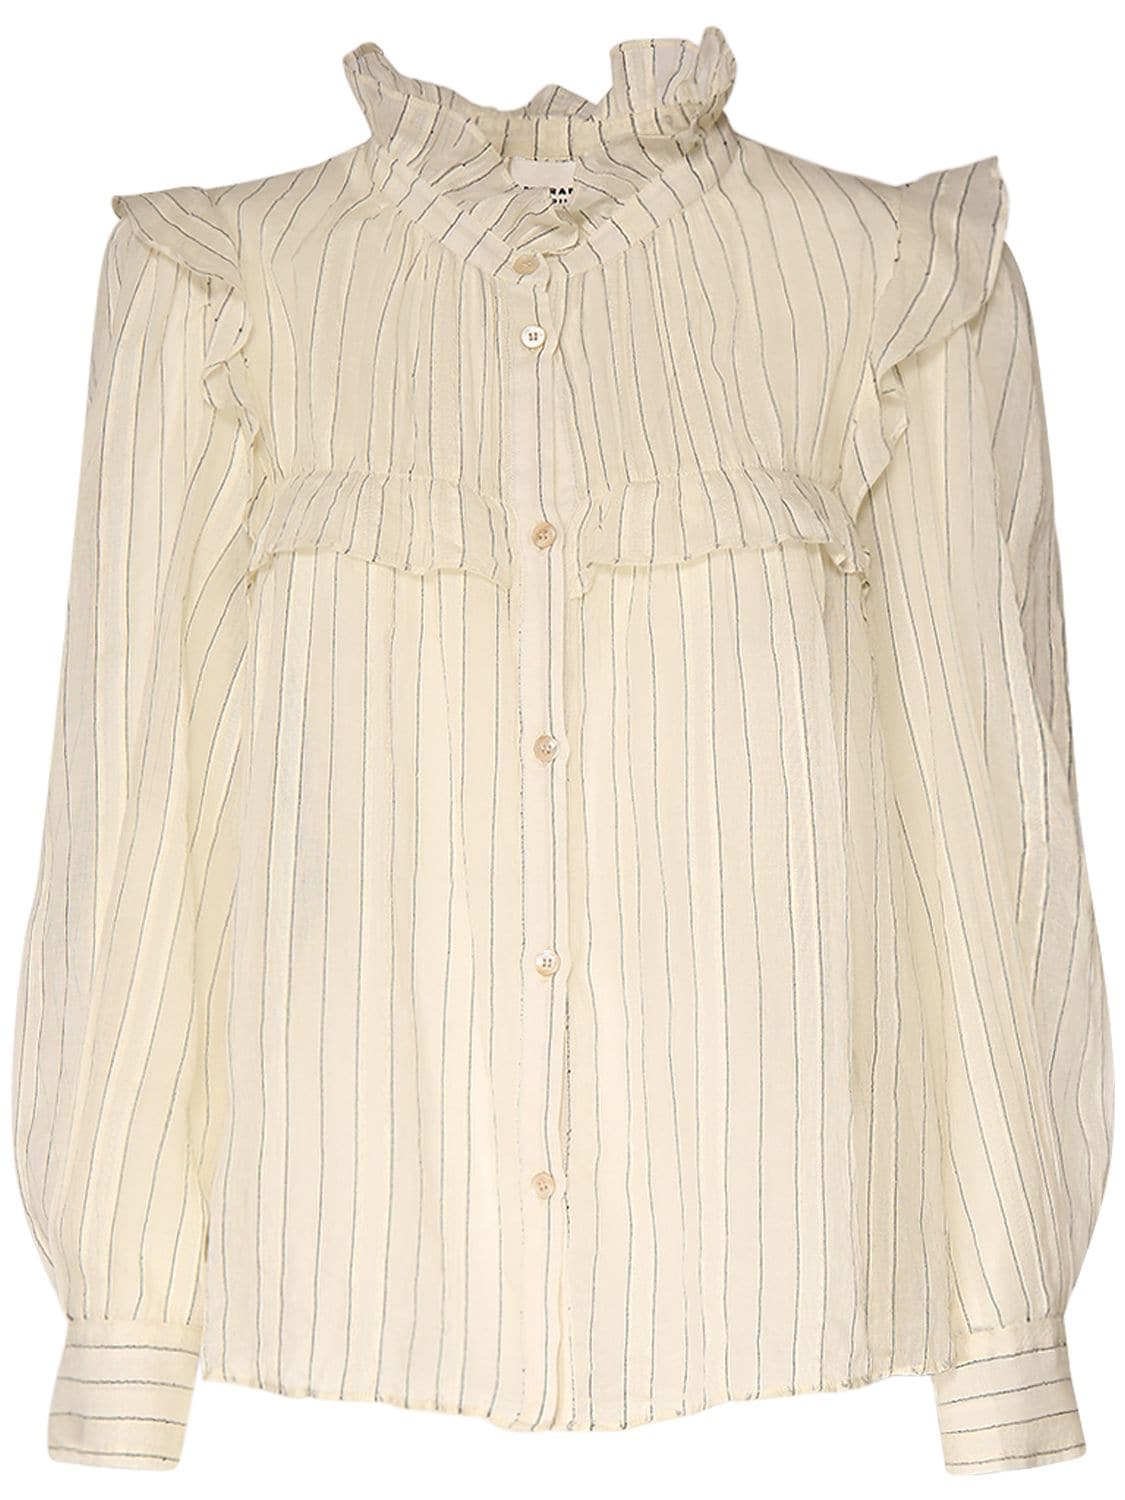 Image of Idety Striped Cotton Shirt W/ Ruffles